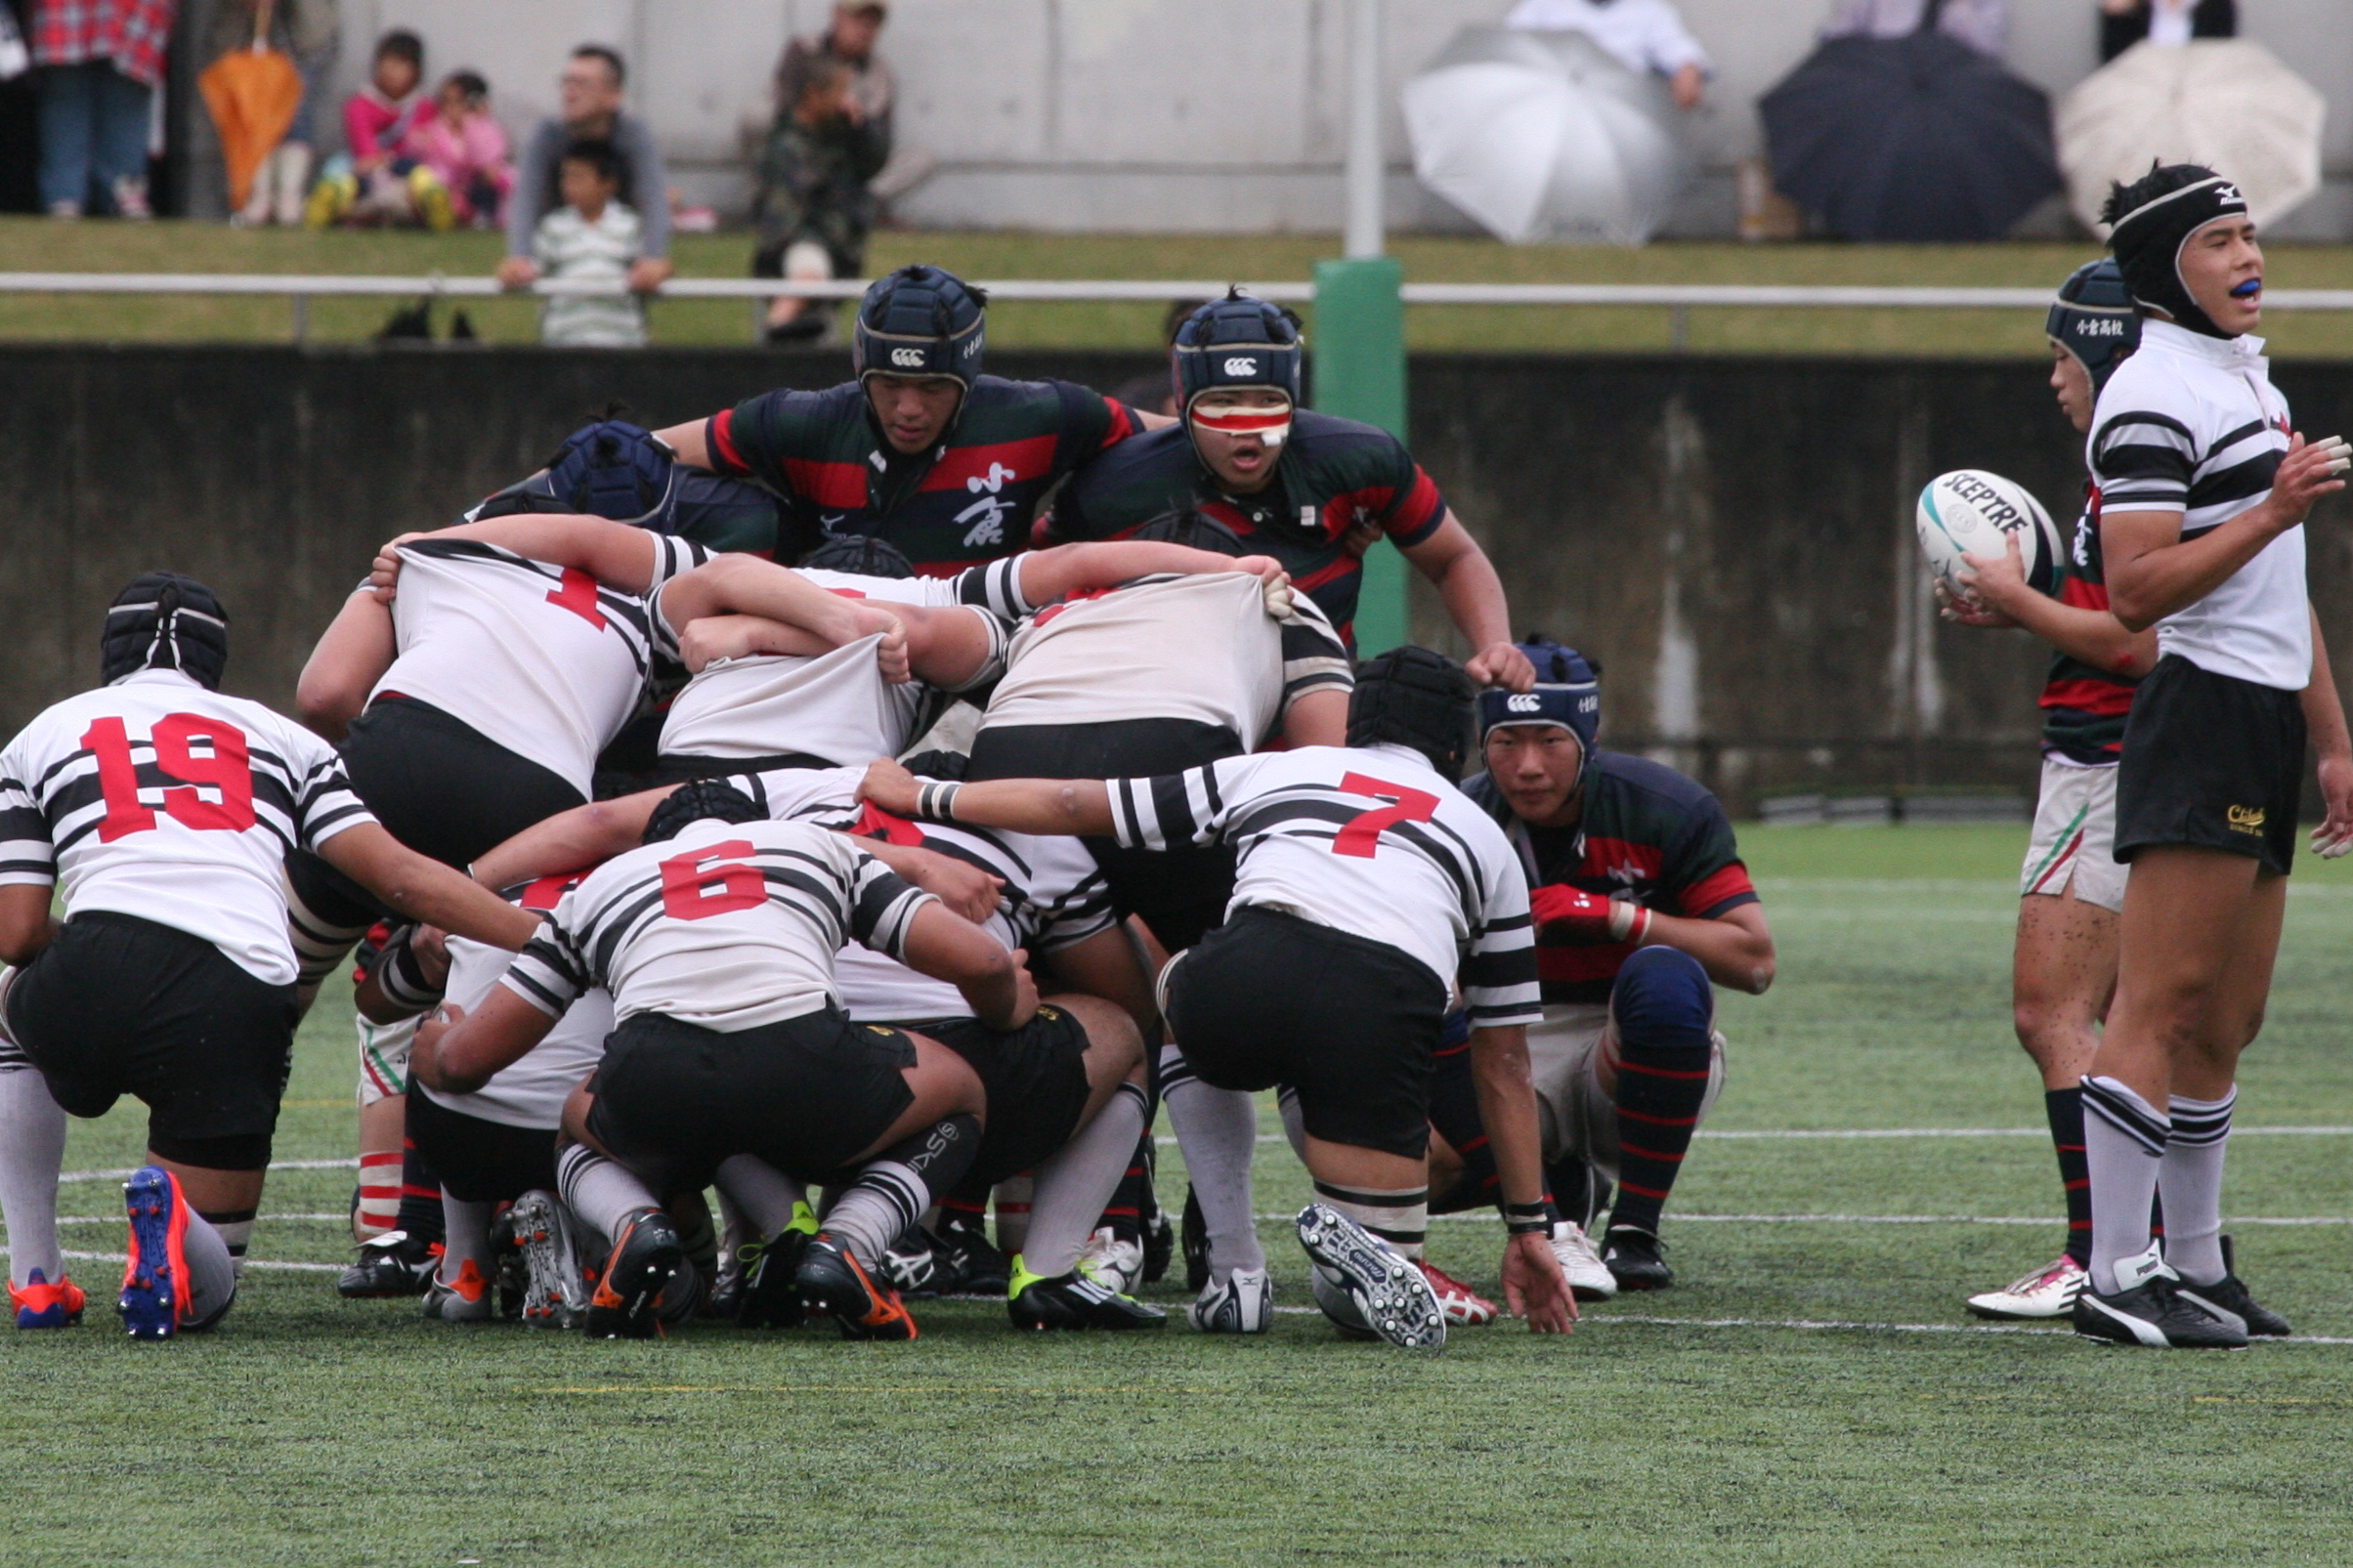 http://kokura-rugby.sakura.ne.jp/2011.11.6-2-16.JPG